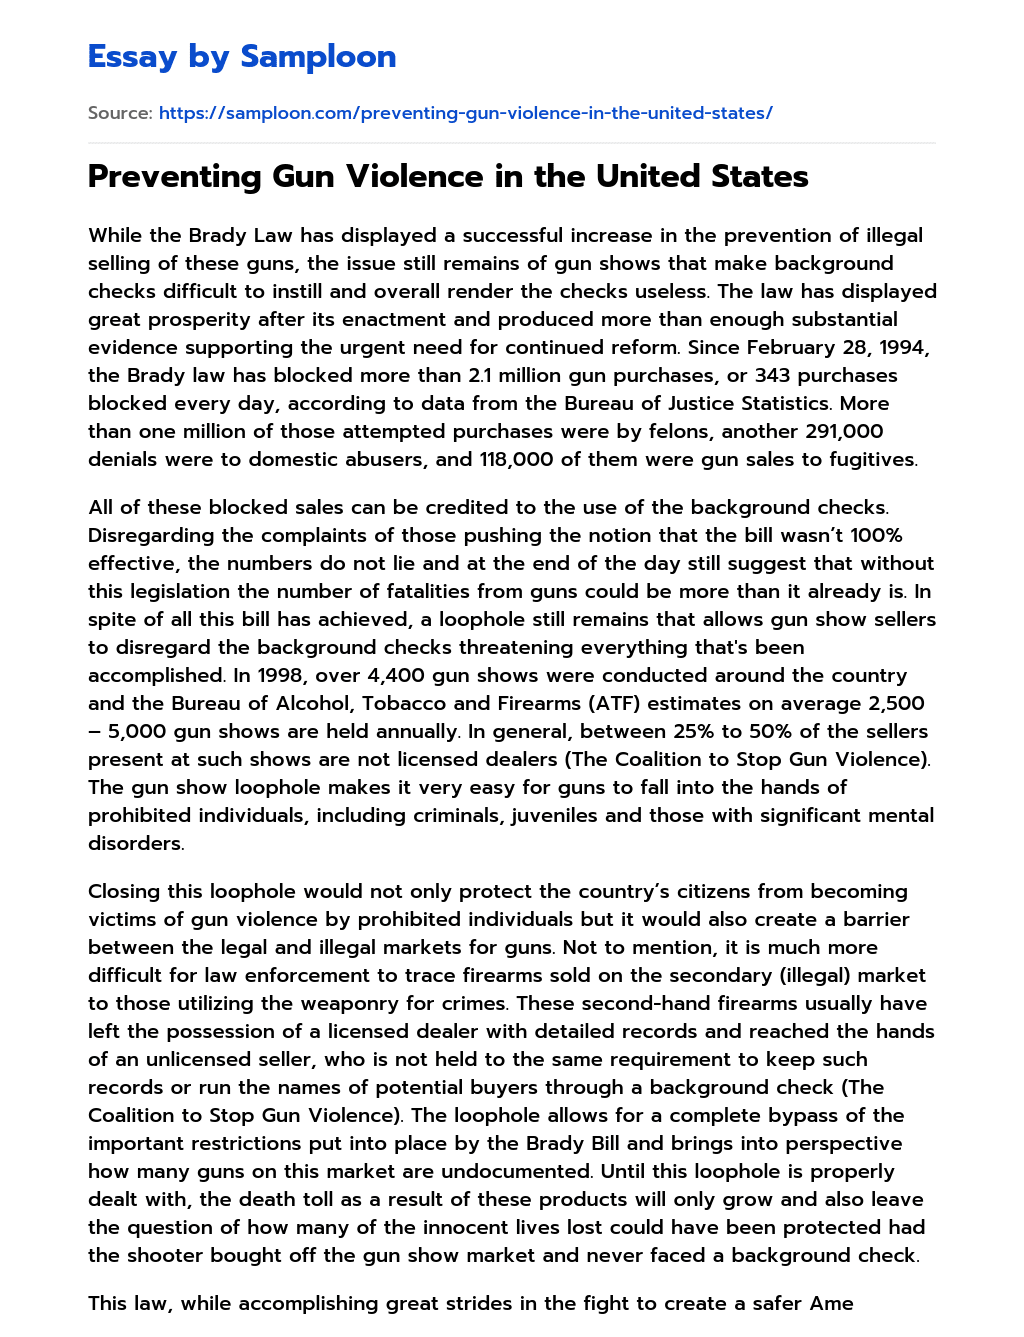 Preventing Gun Violence in the United States essay